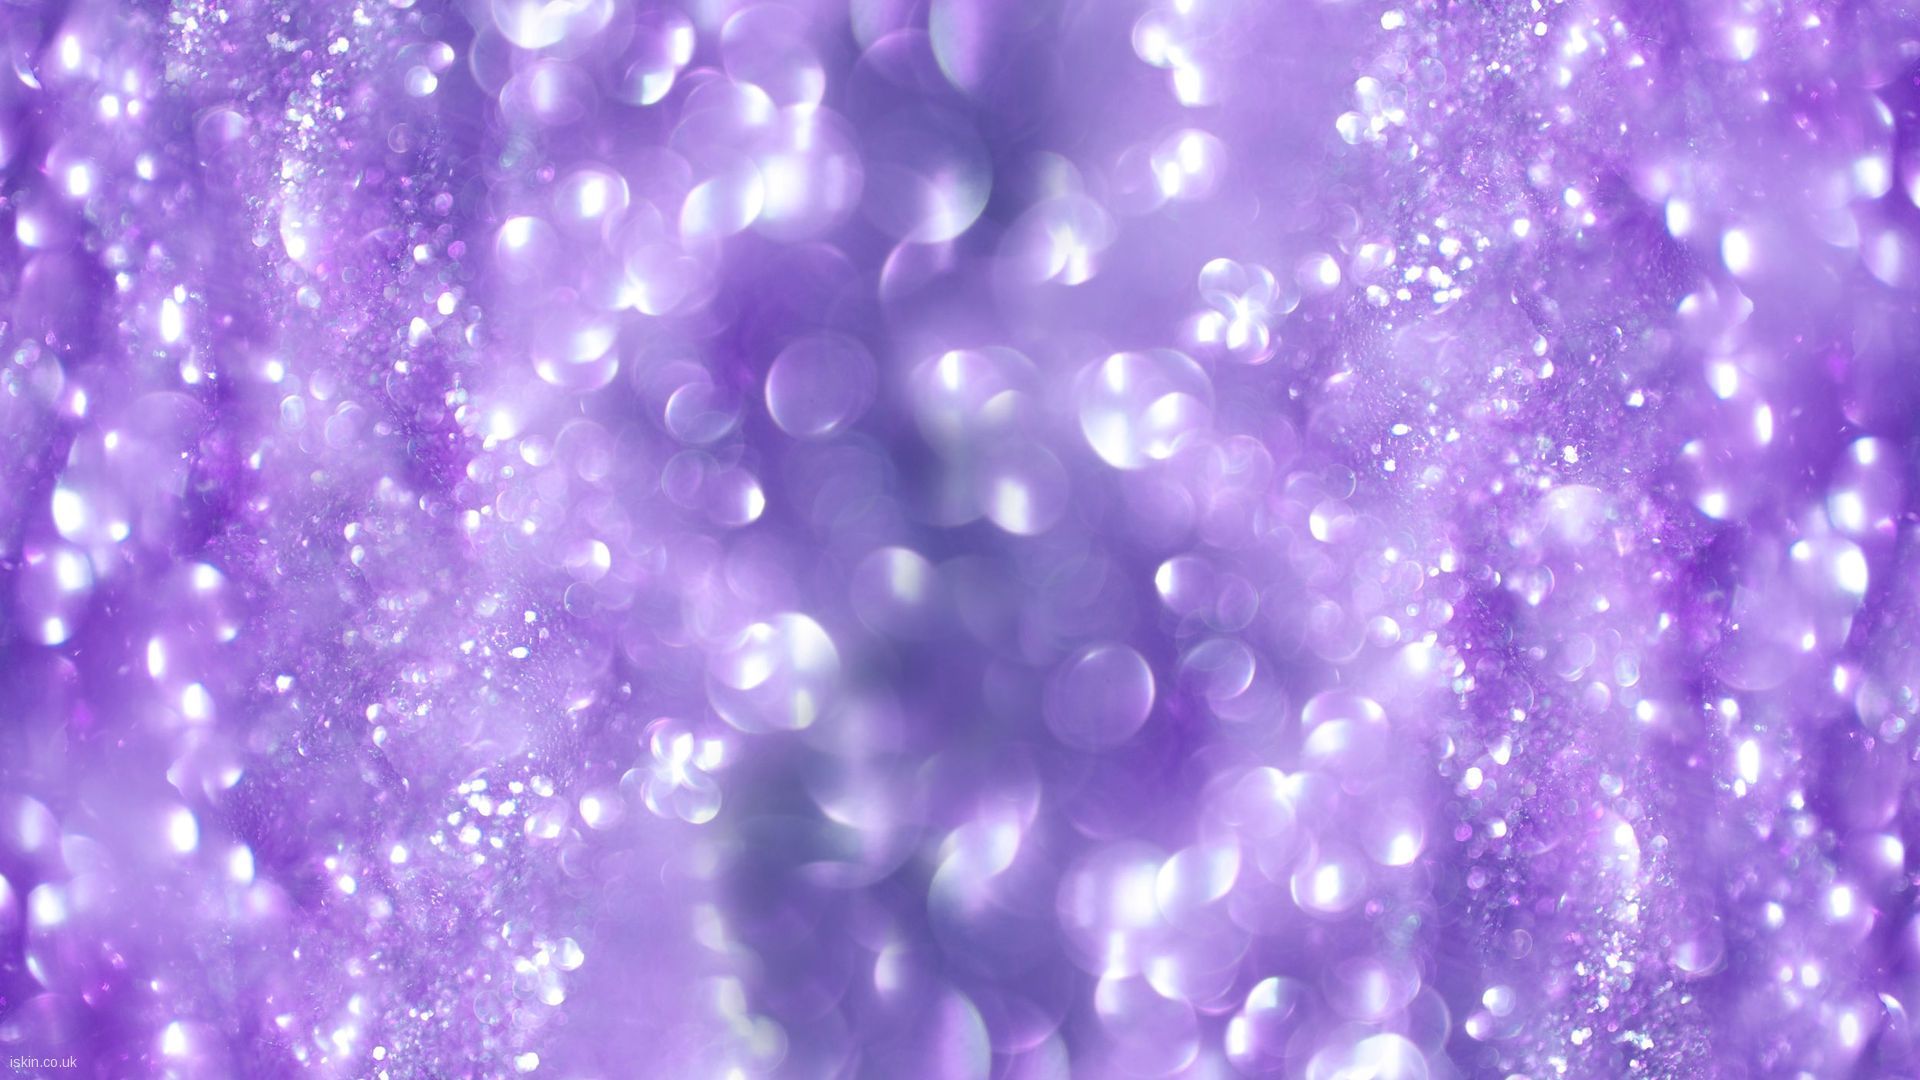 Sparkly Purple Background wallpaper. Gold sparkle wallpaper